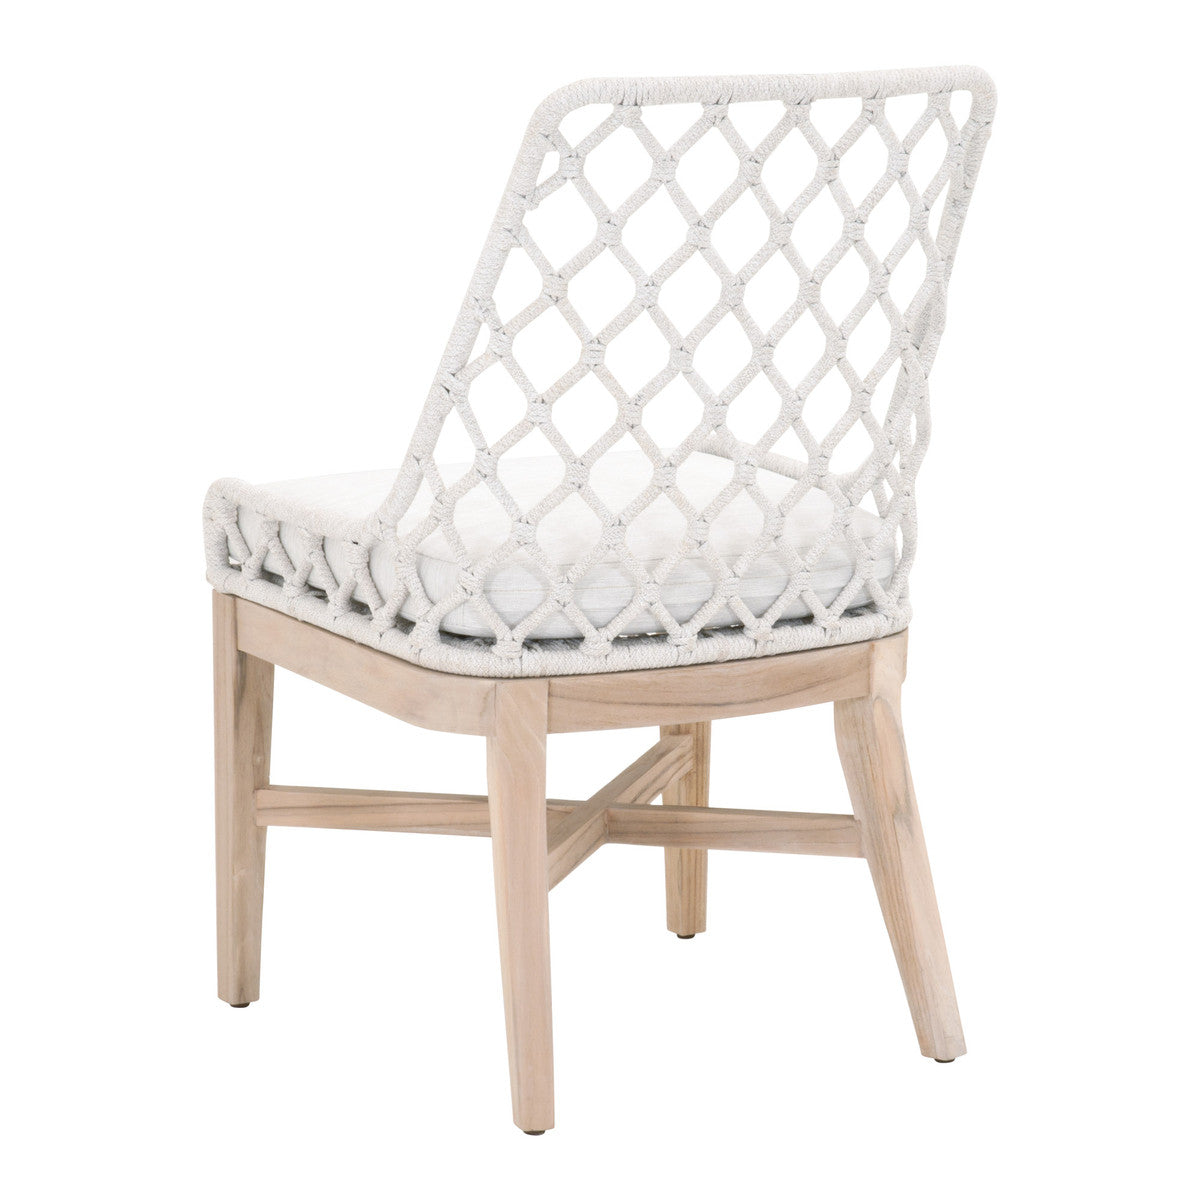 Lattice Outdoor Dining Chair